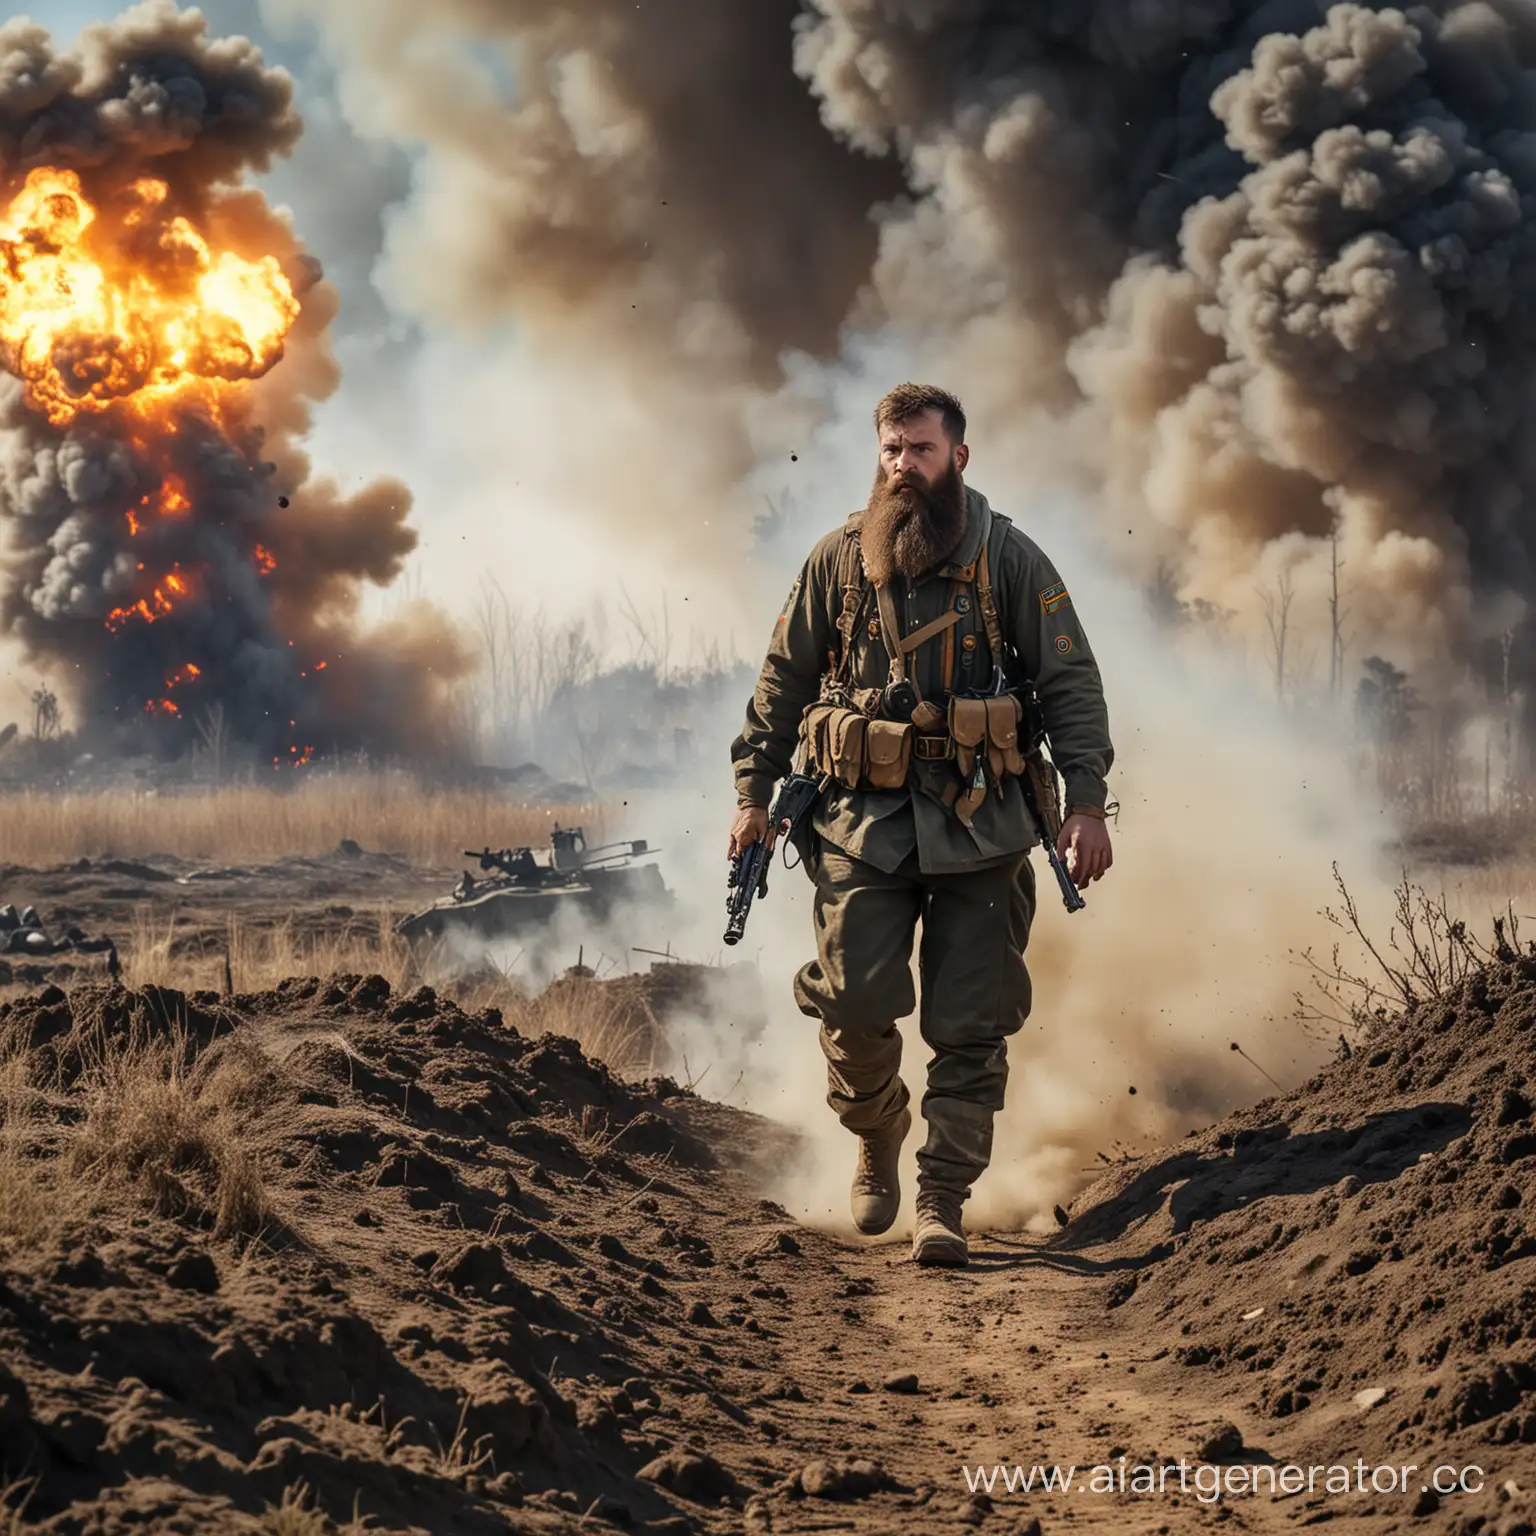 Courageous-Warrior-Landing-amidst-Explosions-in-the-RussoUkrainian-Conflict